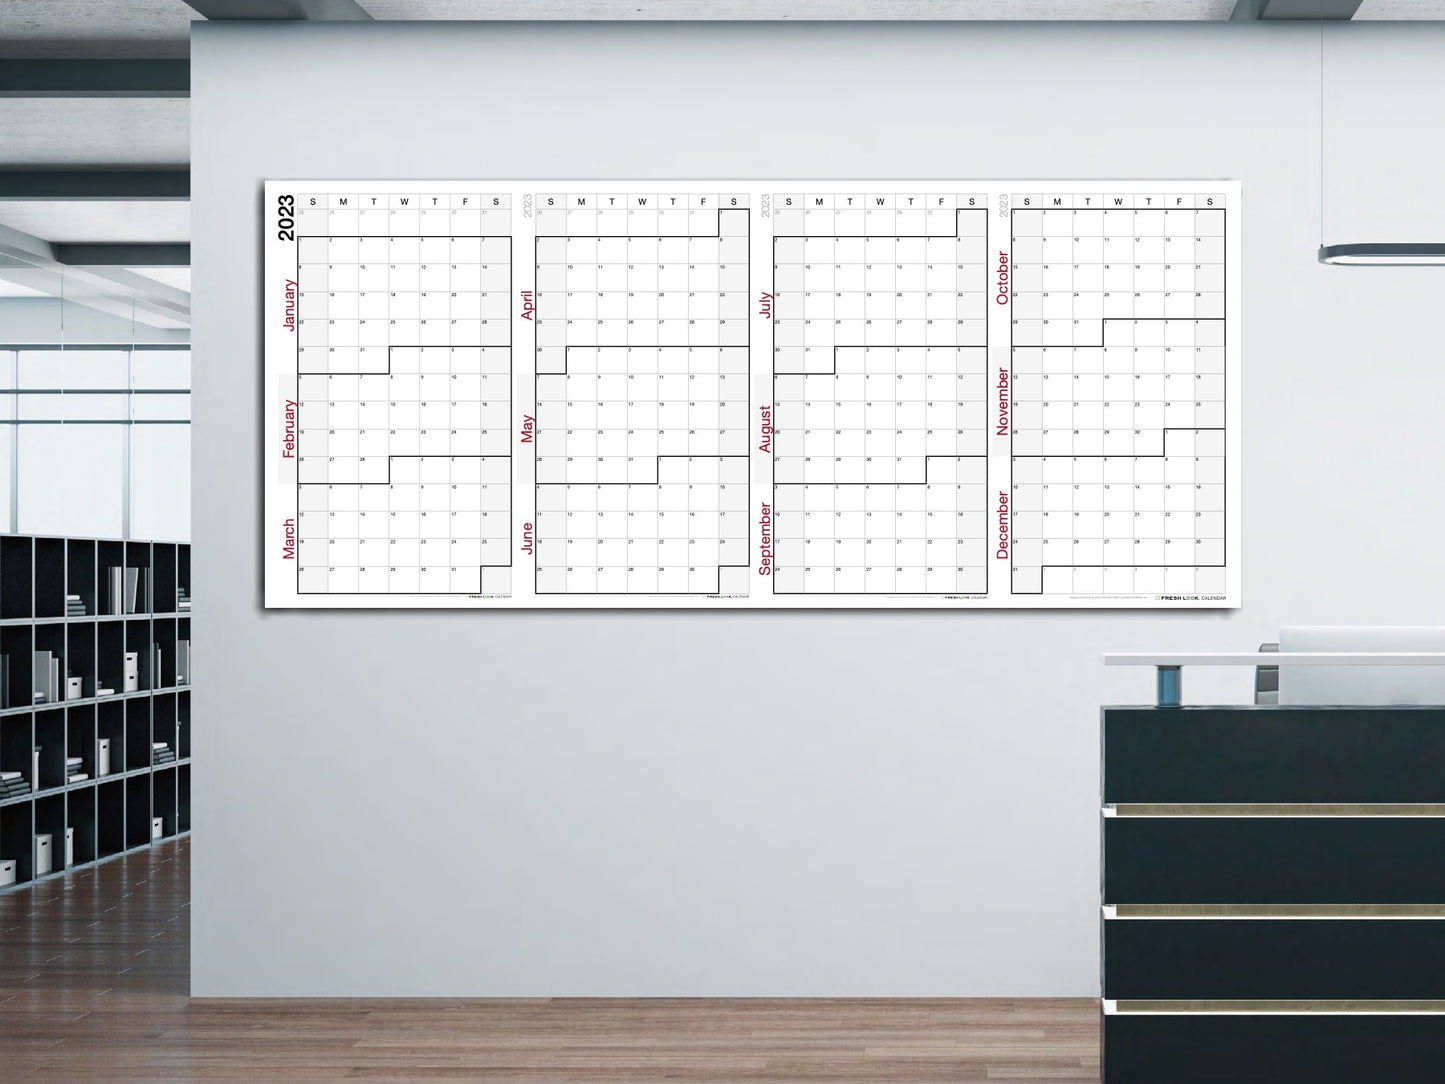 2023 Q2 Calendar Large